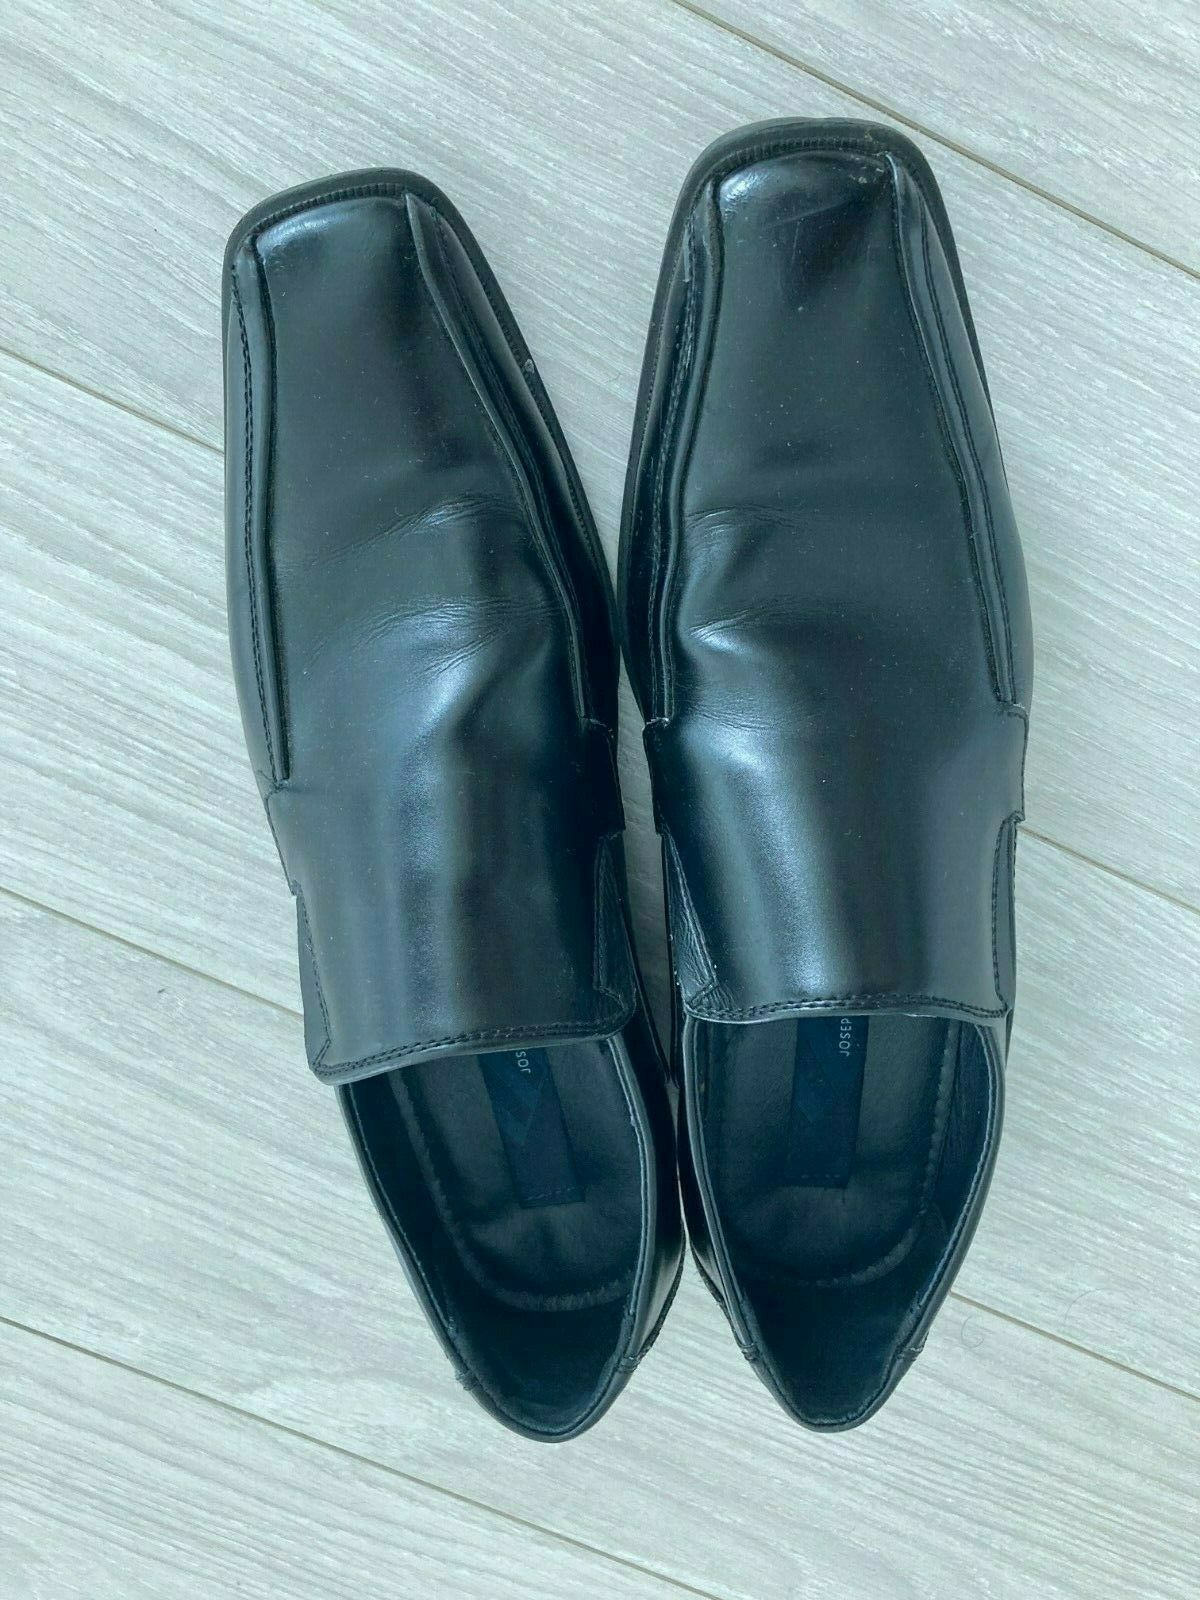 Joseph Abboud black leather men dress shoes size 10 US (43 EU) slip on loafers